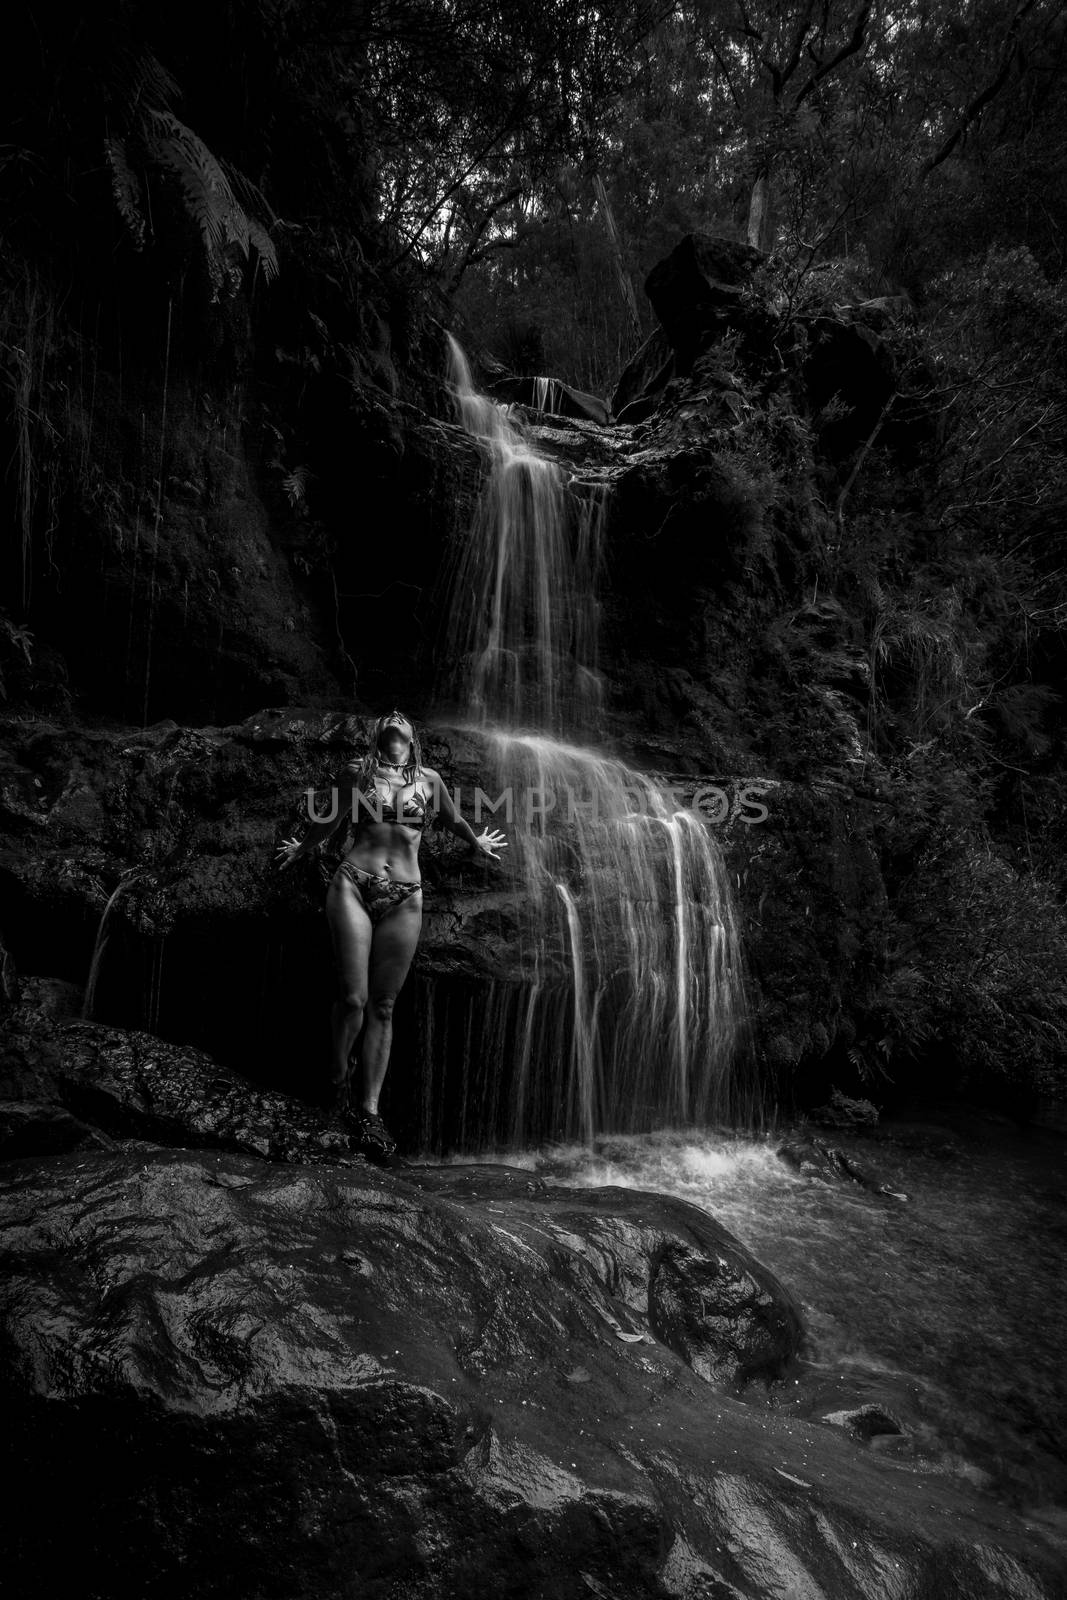 Bikini woman stands in remote bushland waterfall by lovleah